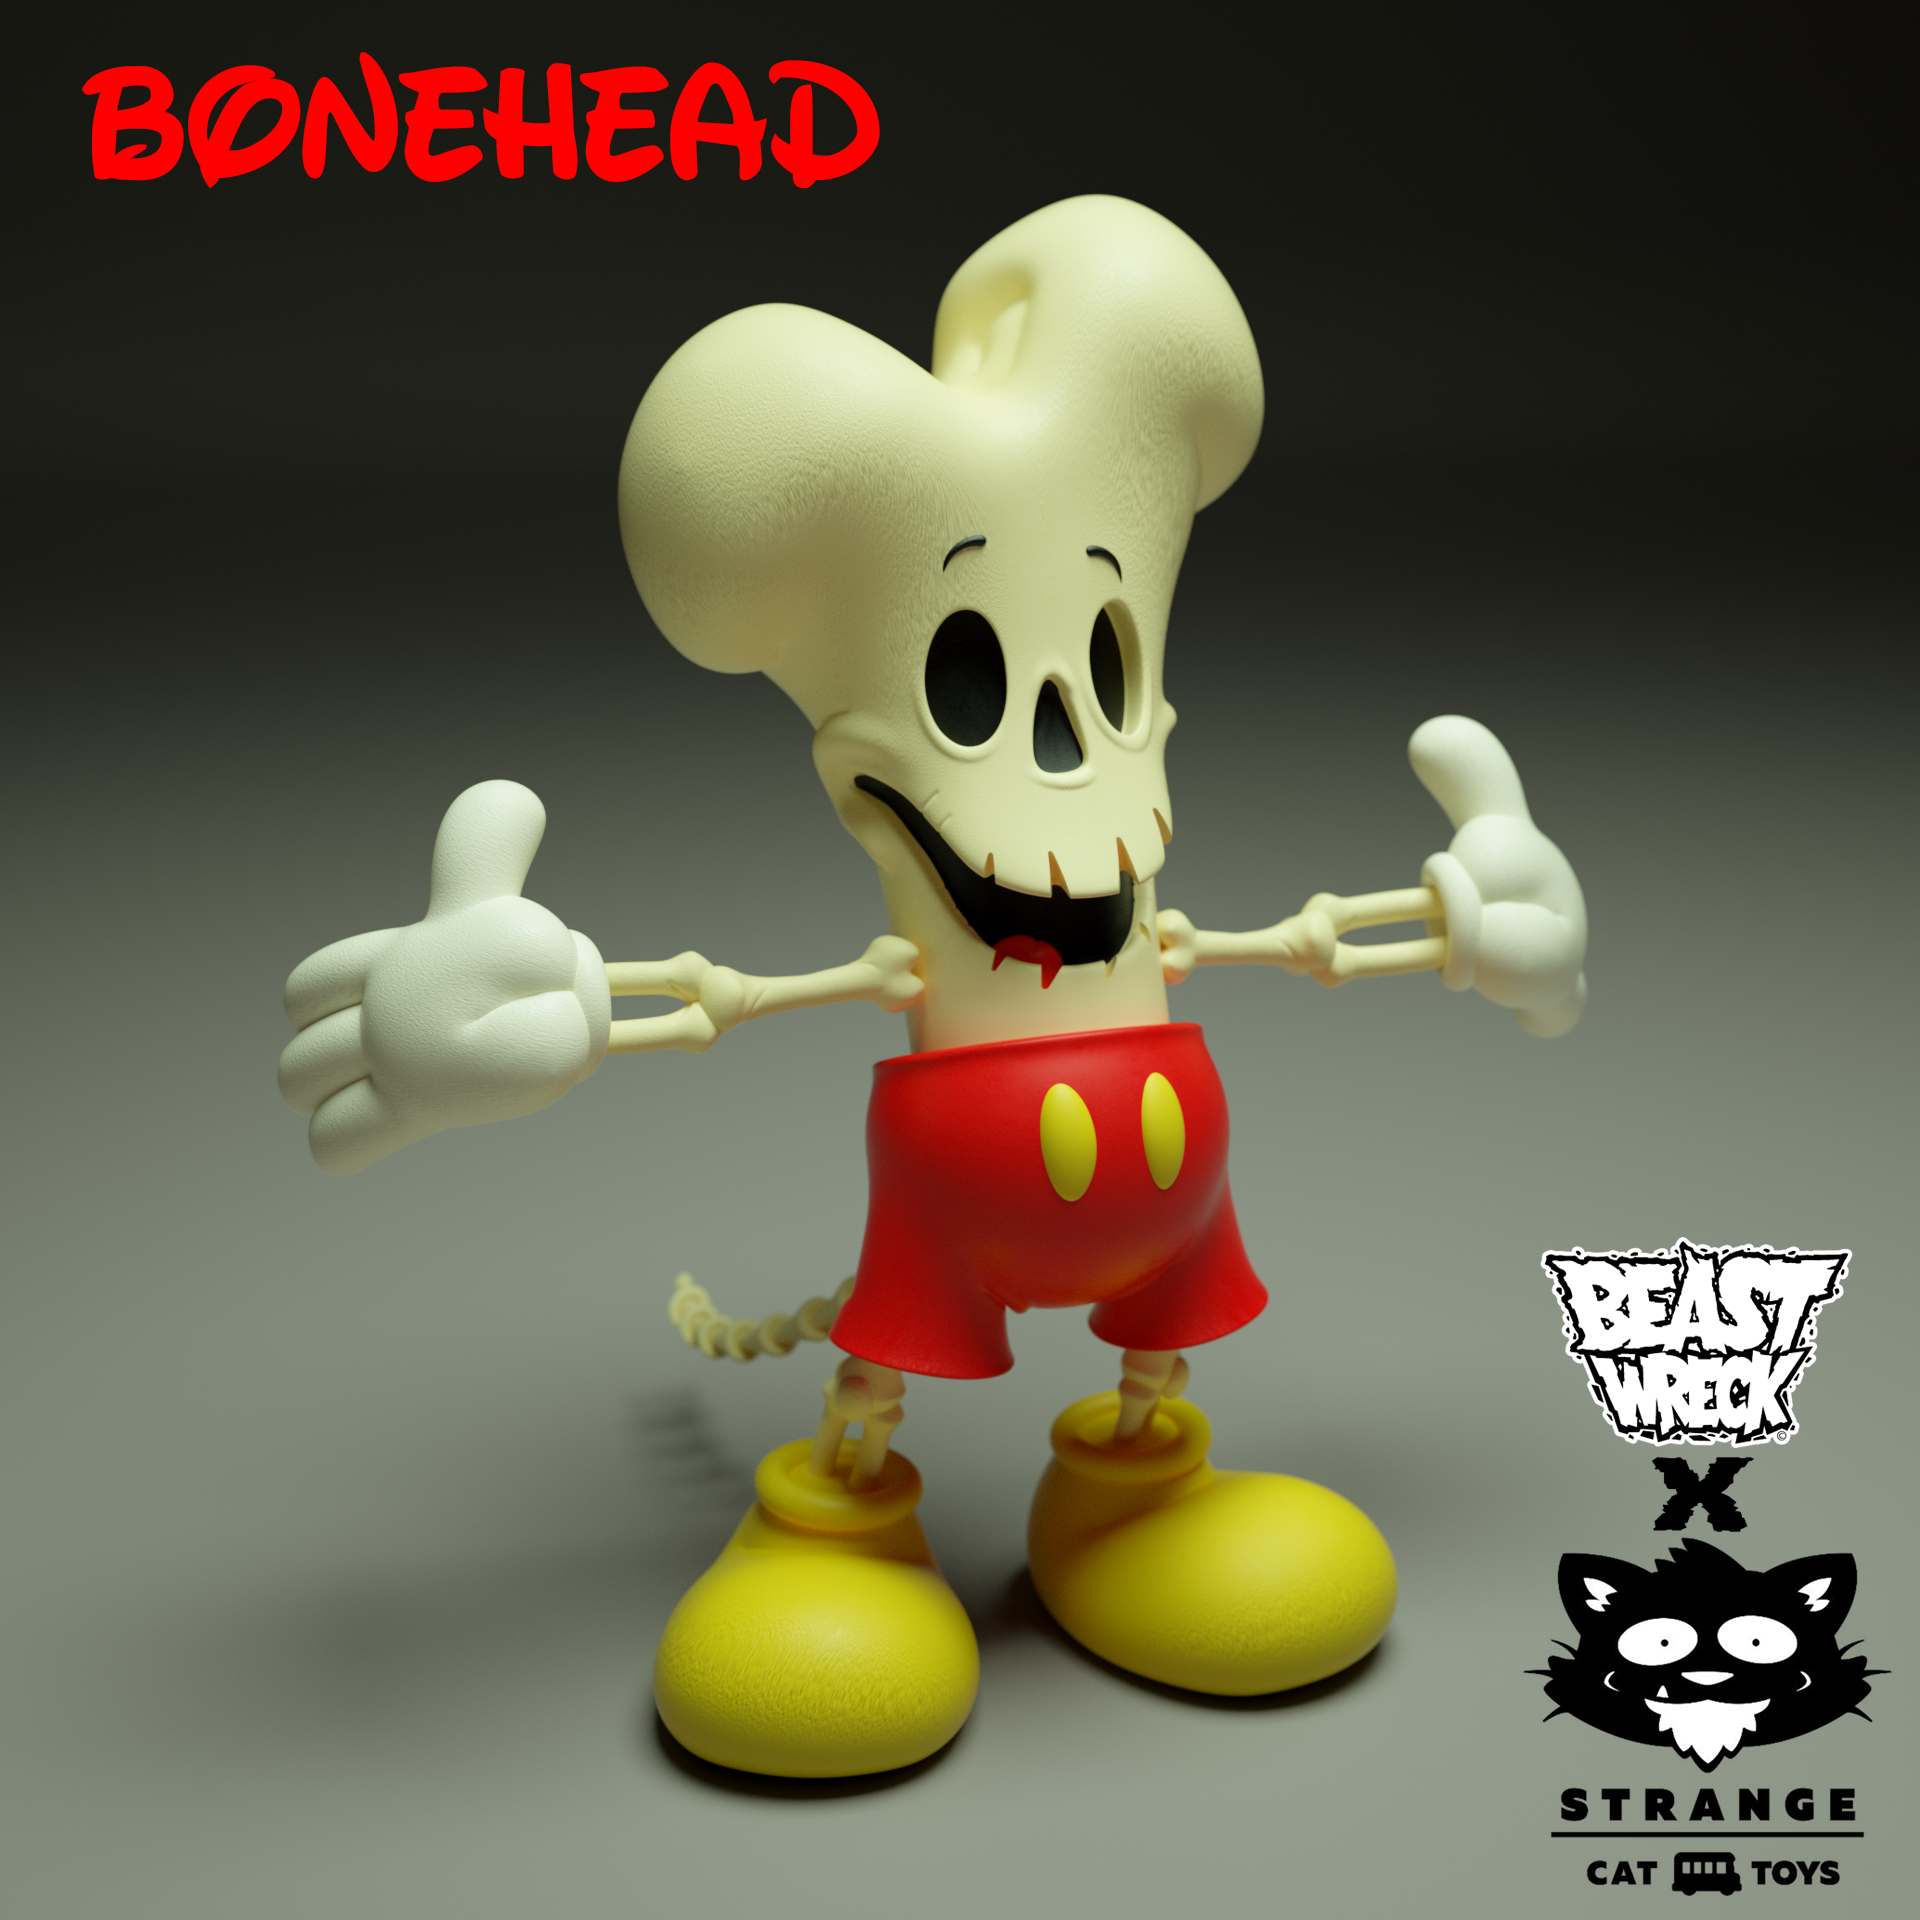 BONEHEAD by Beast Wreck